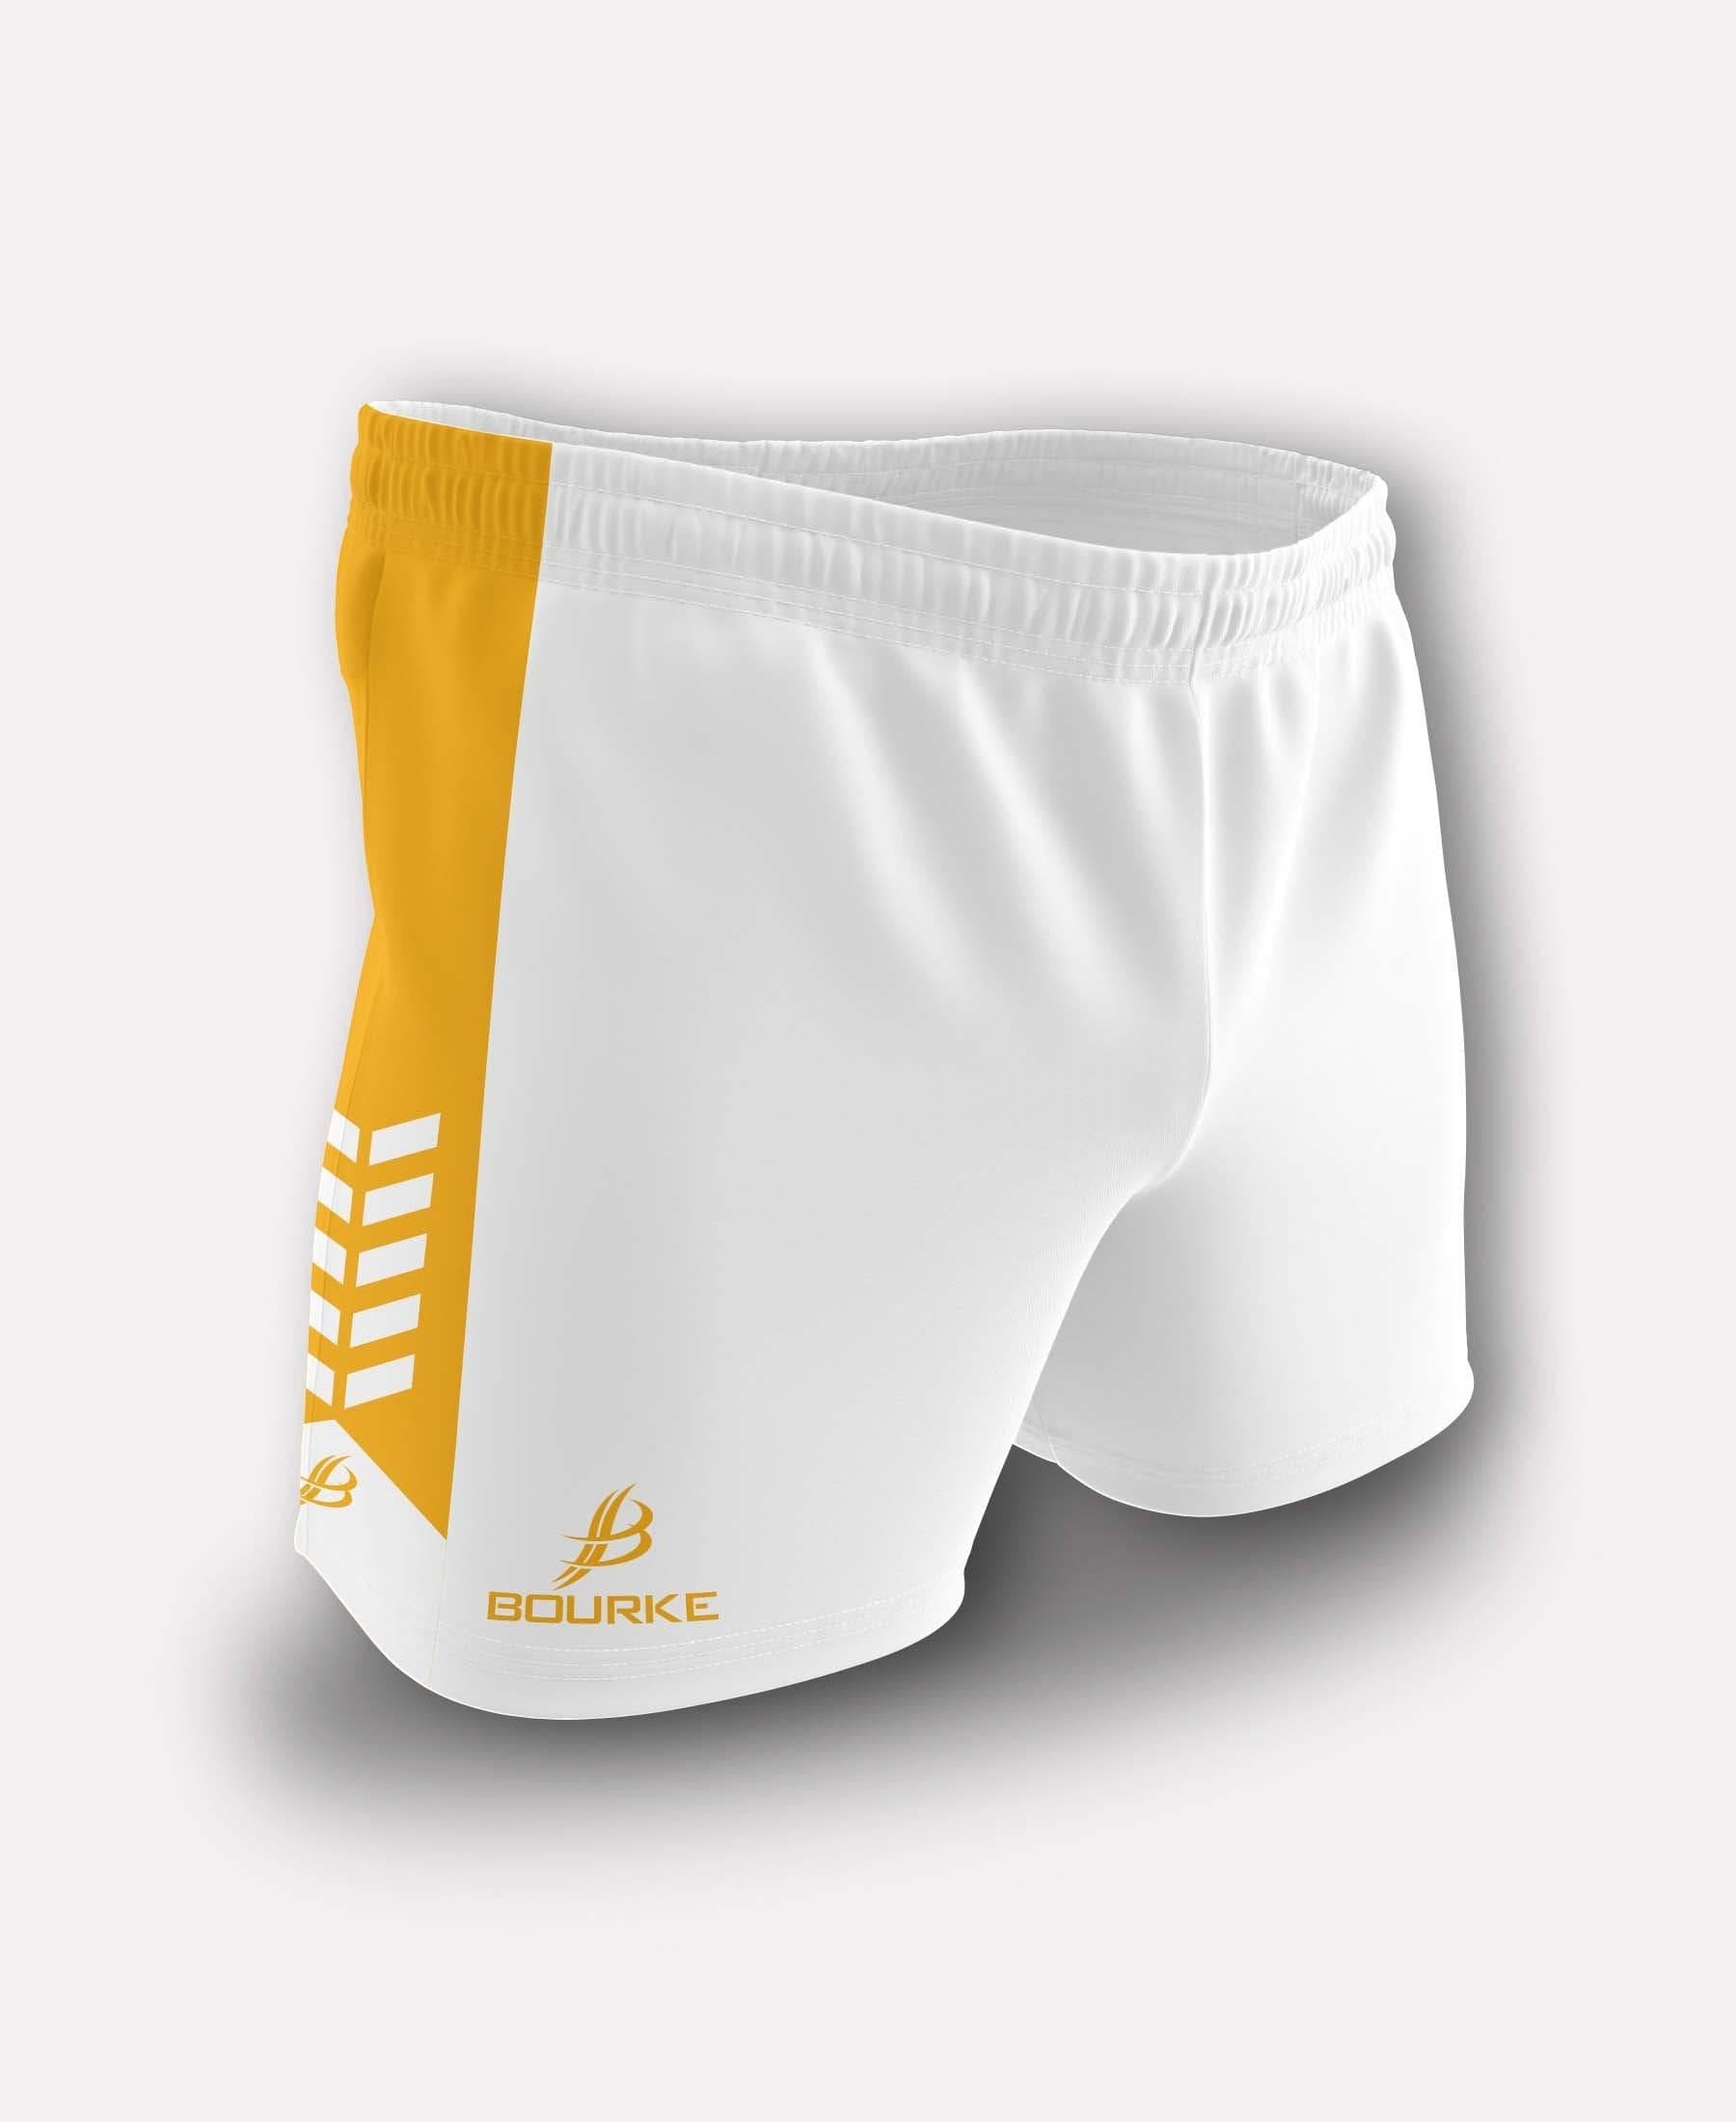 Chevron Adult Shorts (White/Amber) - Bourke Sports Limited